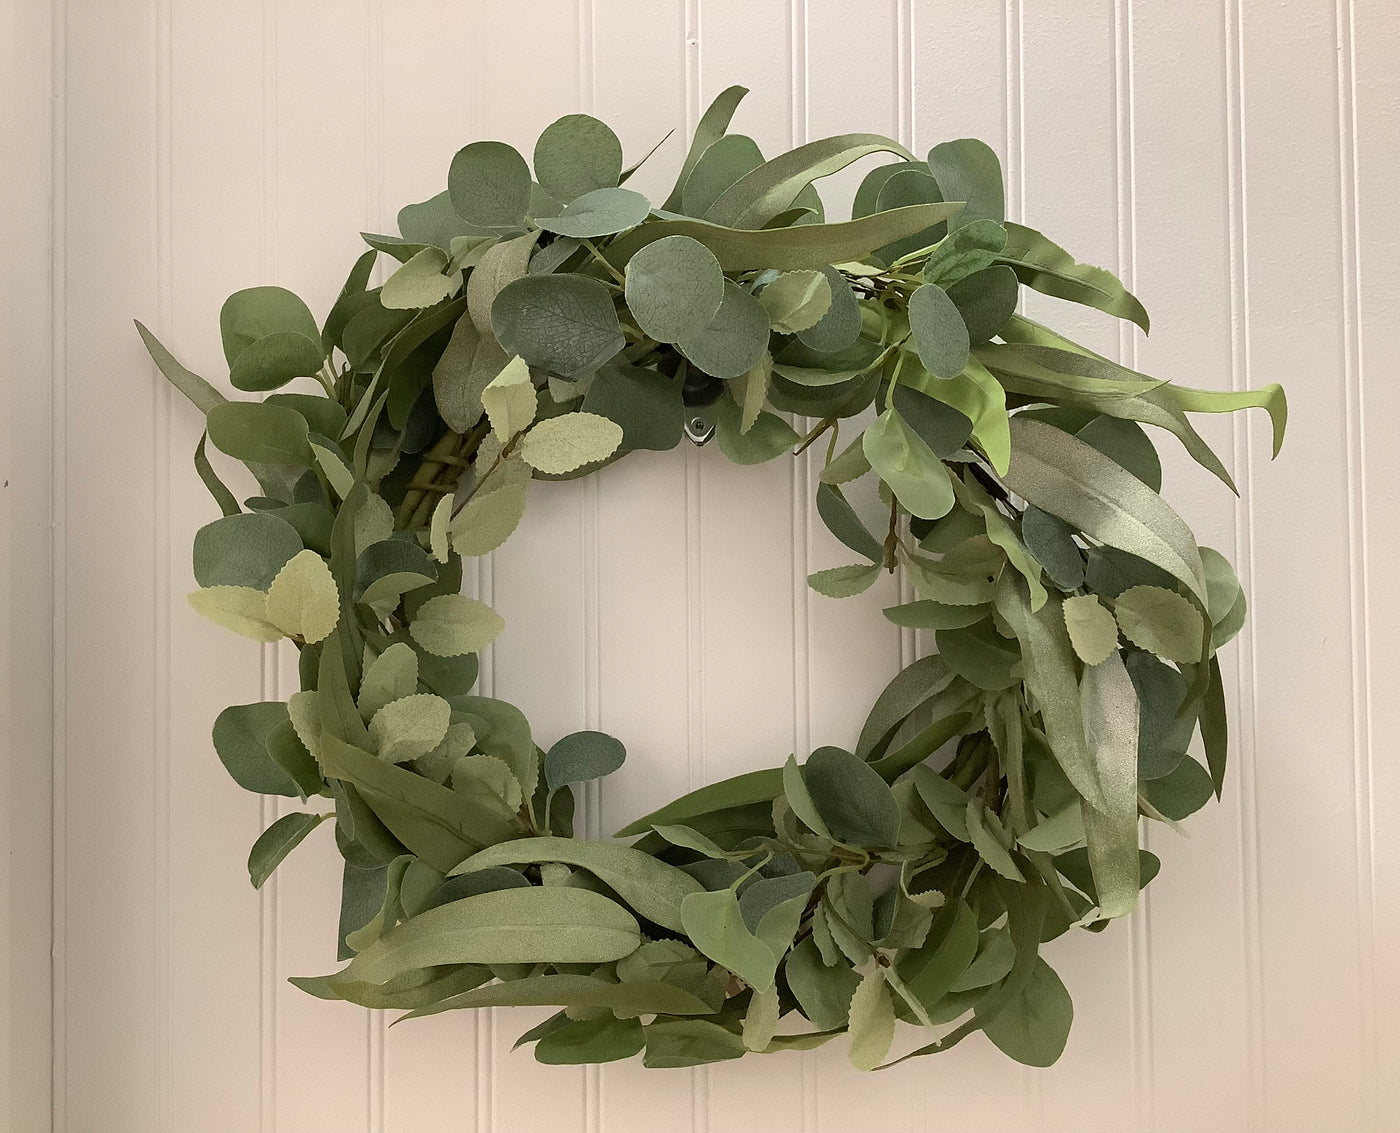 Mixed Greenery Wreath 18”